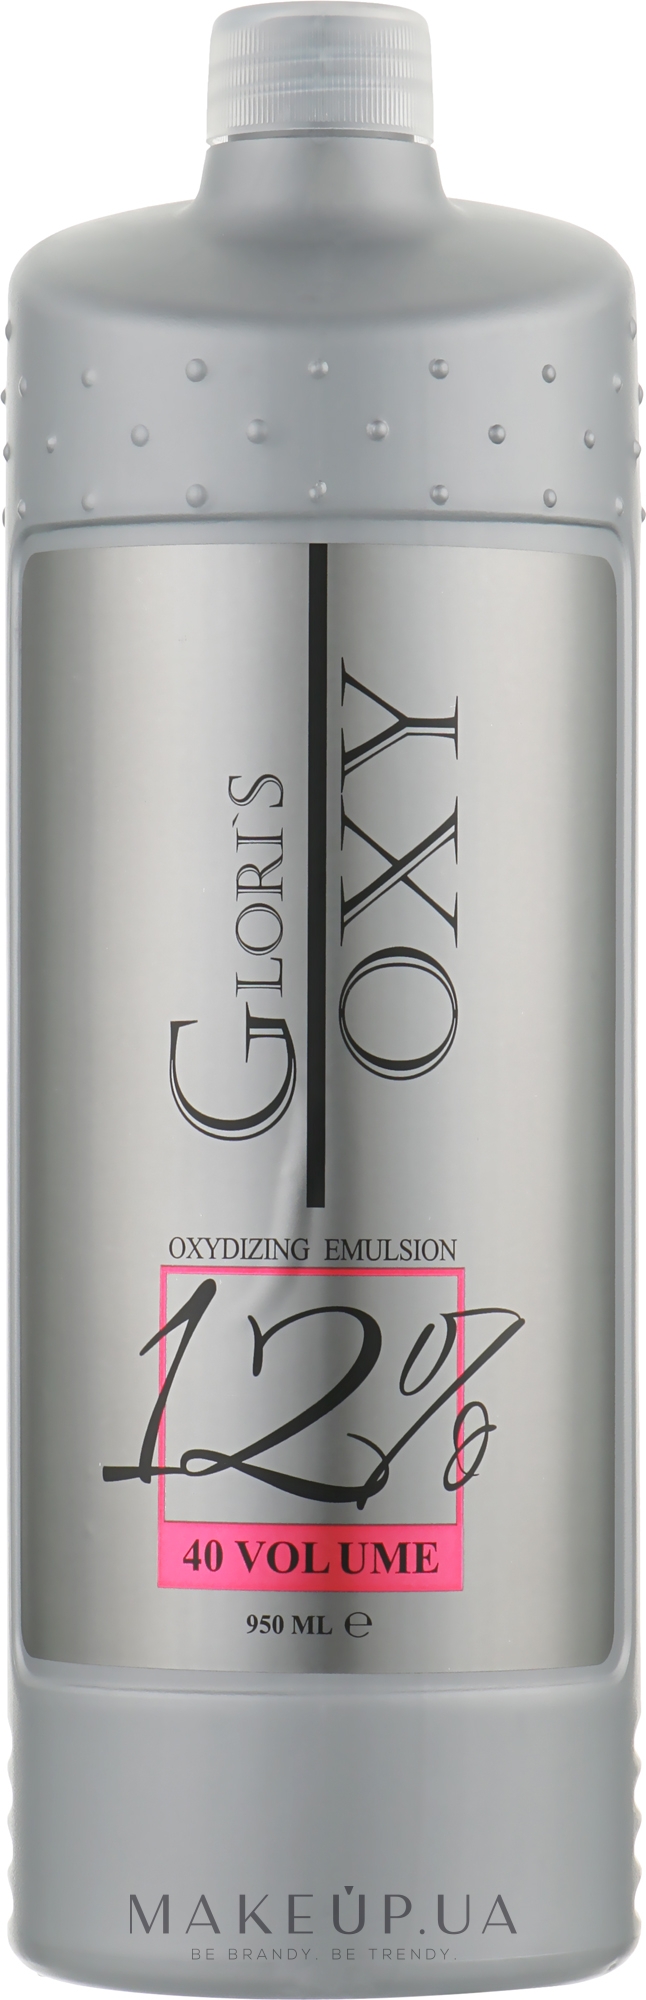 Окислительная эмульсия 12 % - Glori's Oxy Oxidizing Emulsion 40 Volume 12 % — фото 950ml